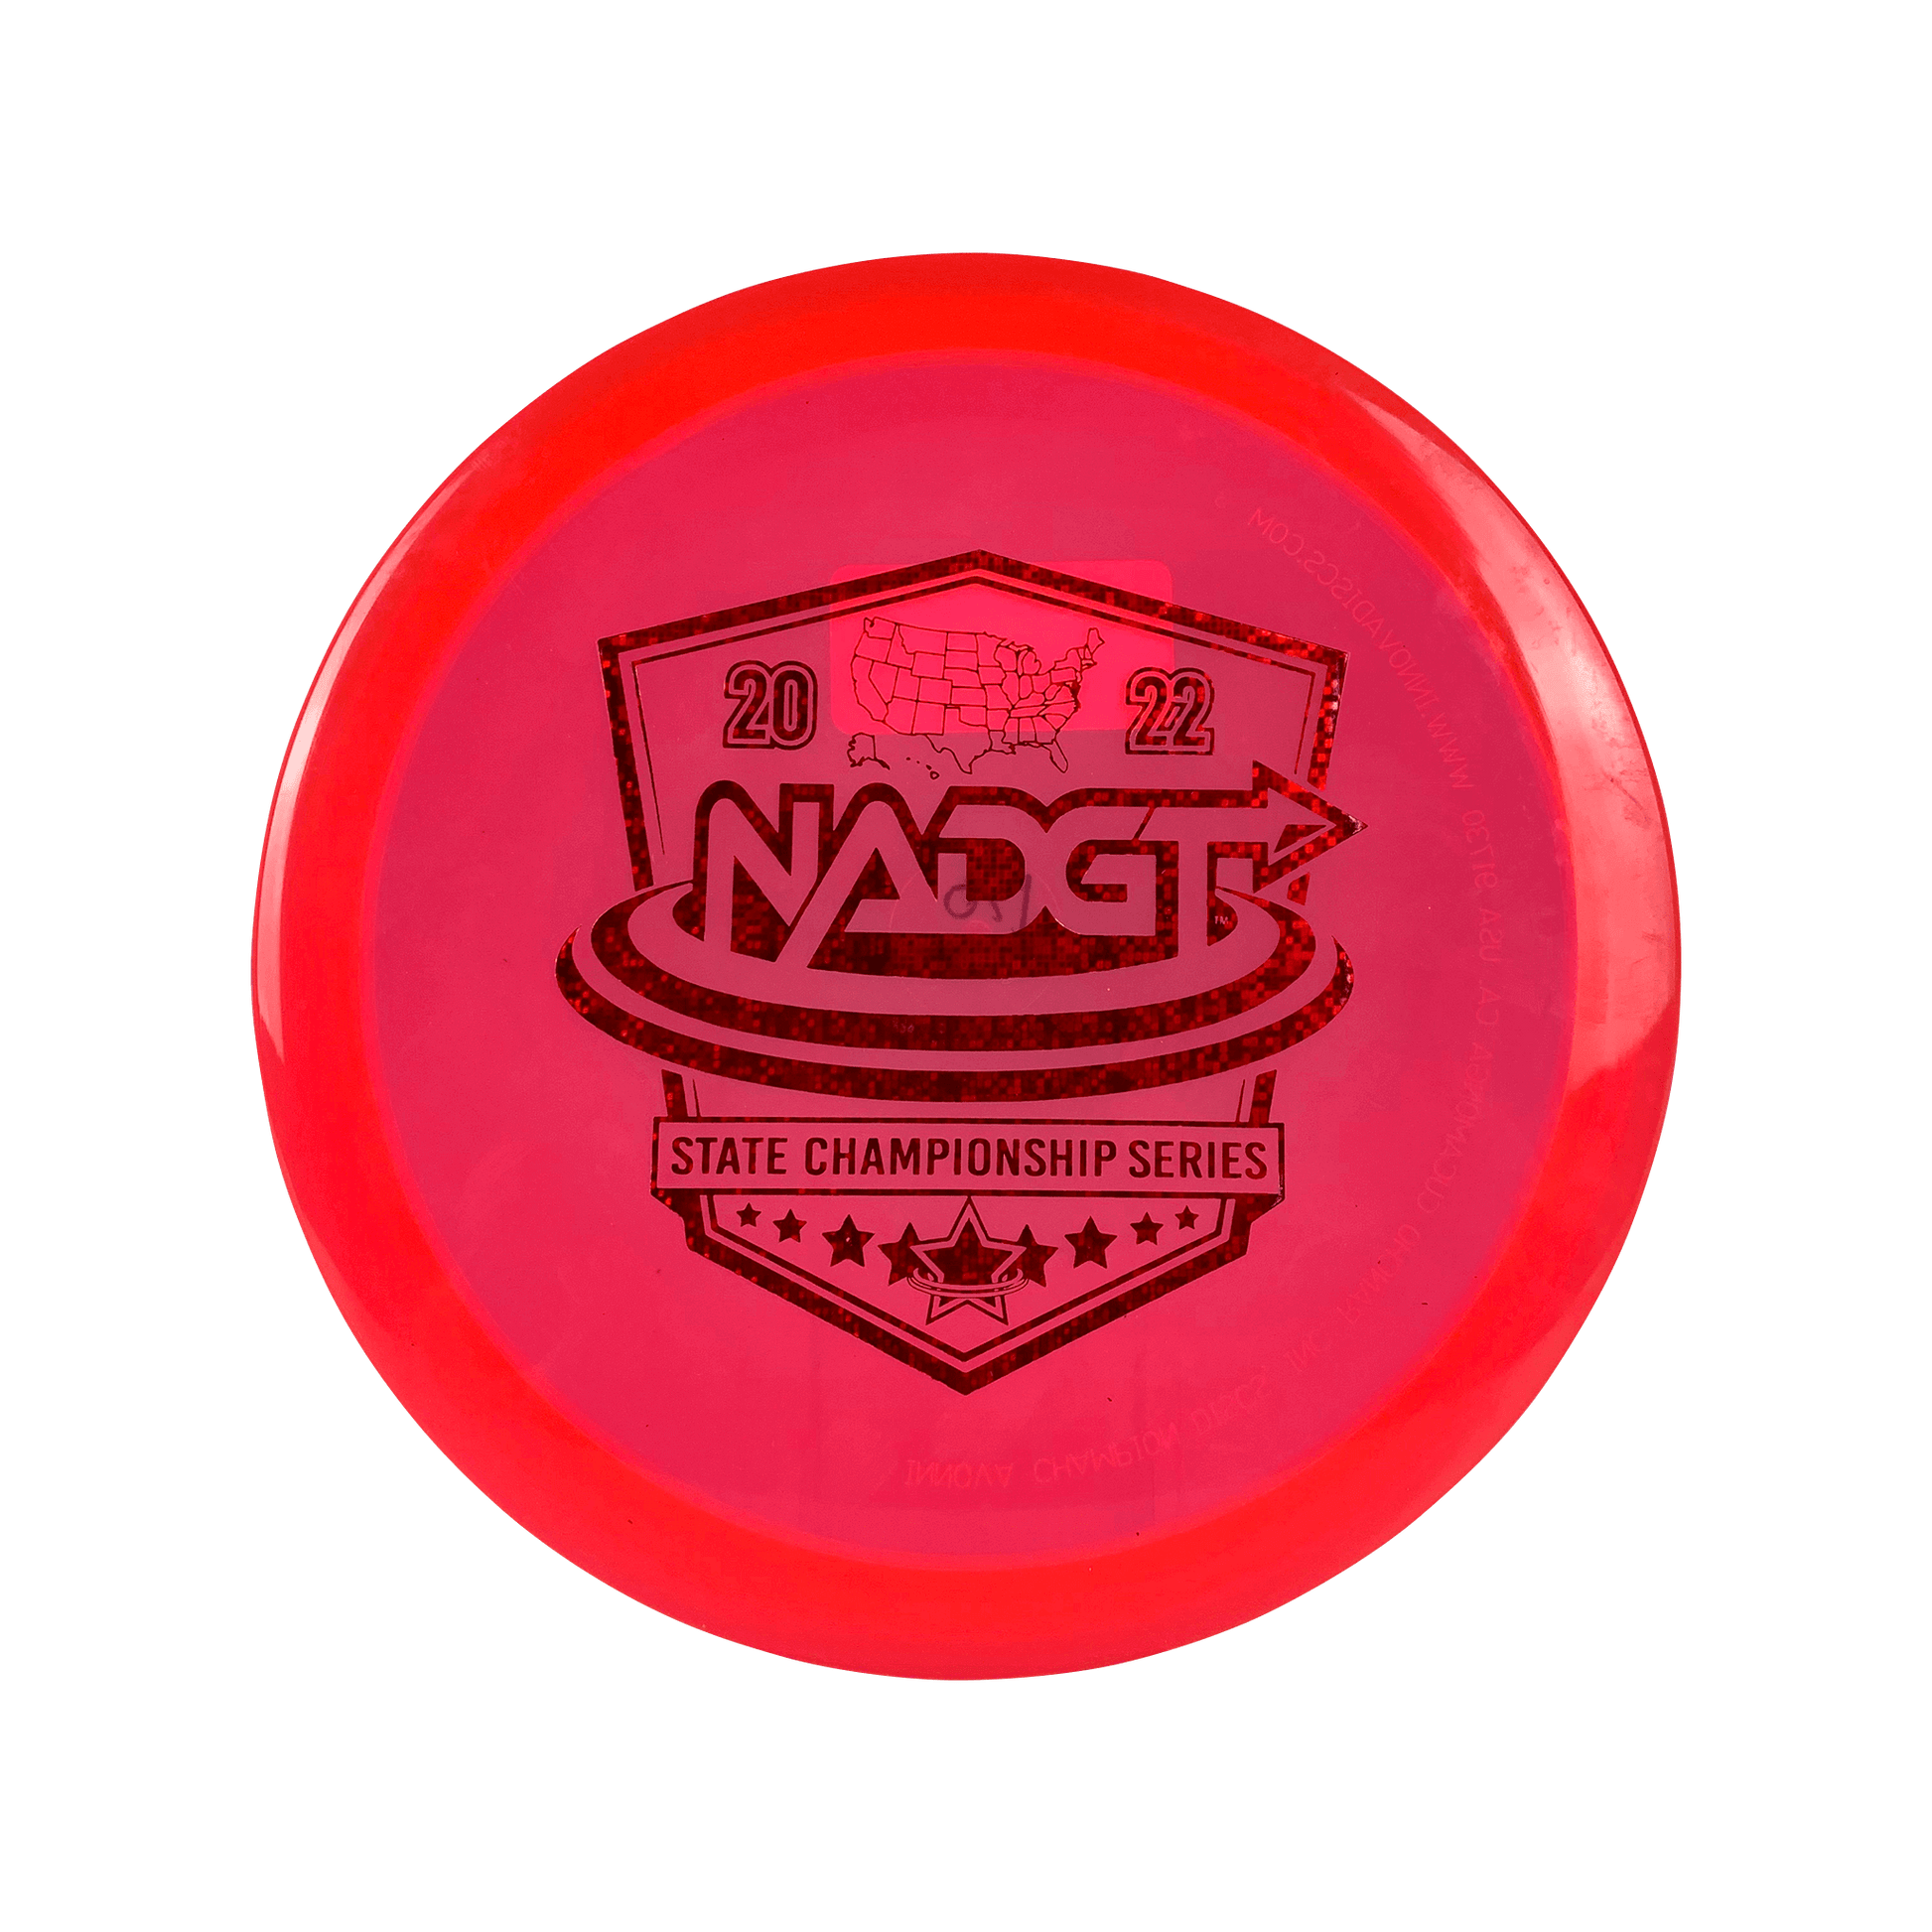 Champion Leopard3 - NADGT Tour Series 2022 Disc Innova hot pink 170 